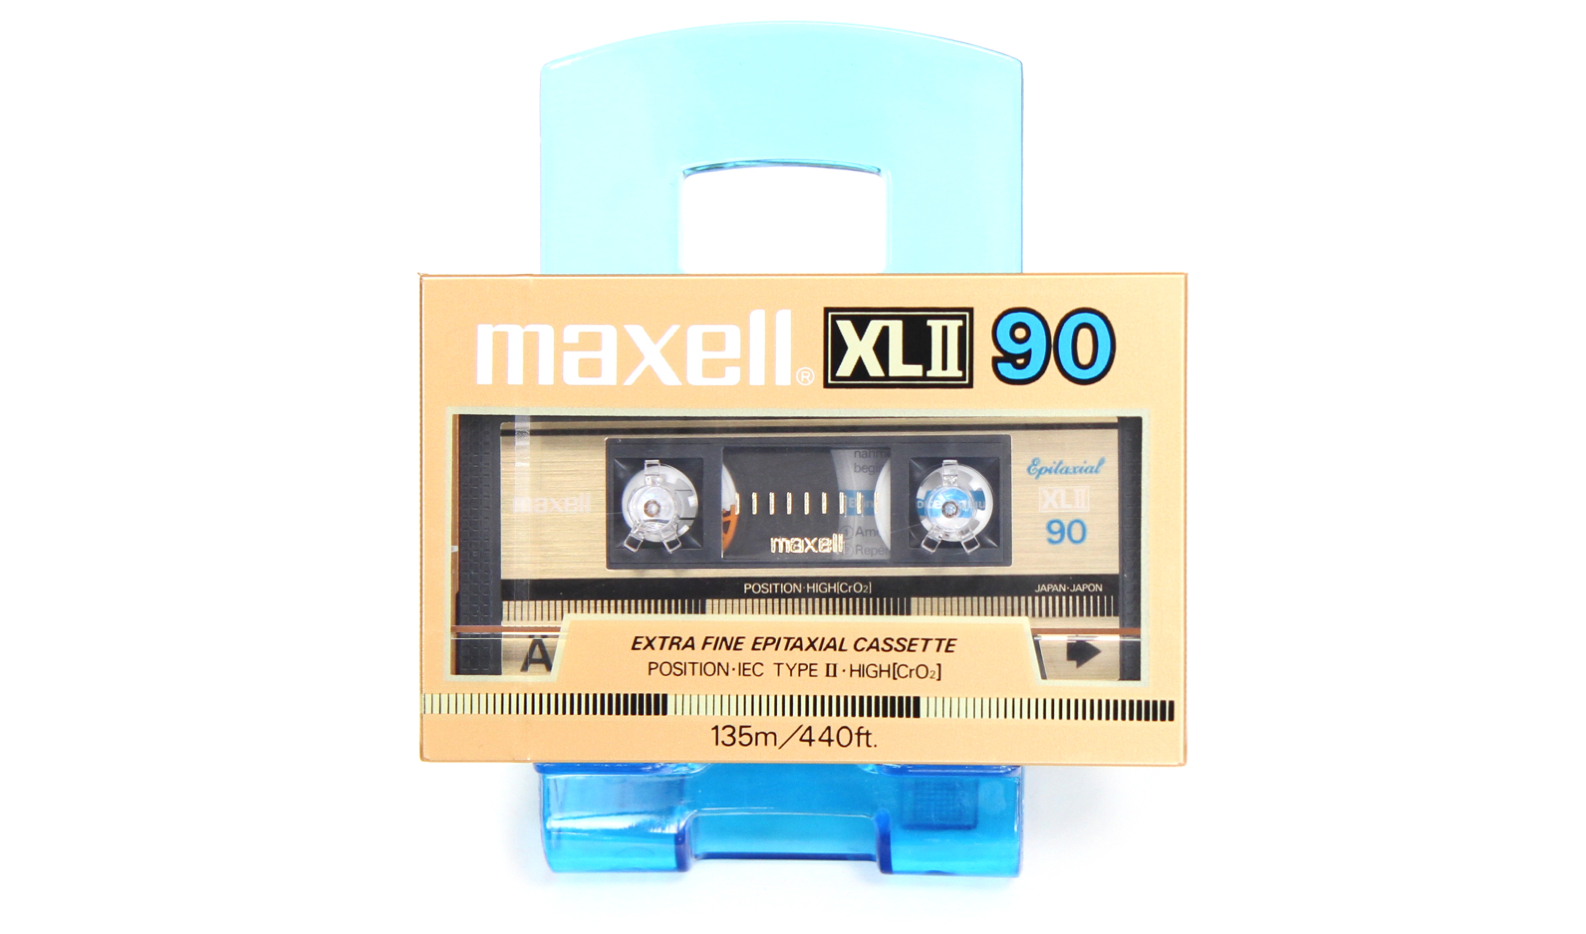 MAXELL XLII-90 Extra Fine Epitaxial